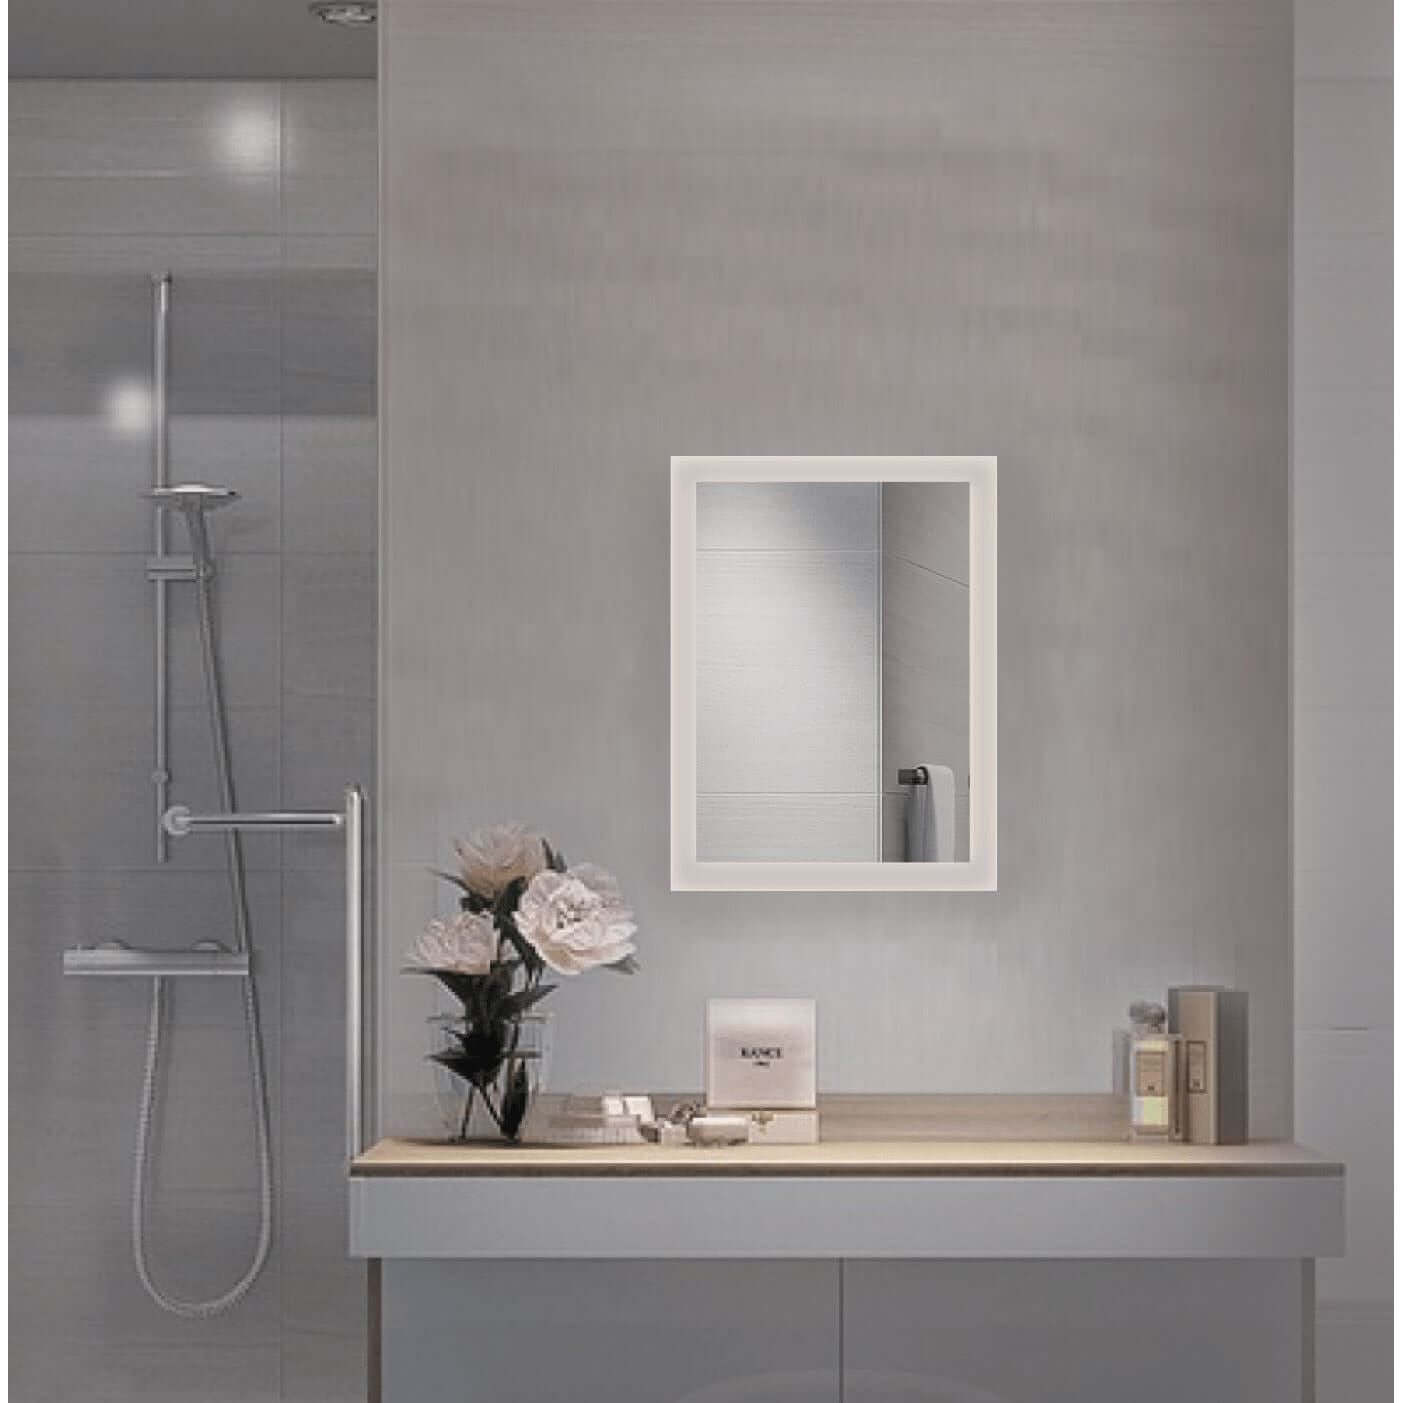 Contemporary bathroom featuring Krugg Bijou 15 X 20 LED mirror with defogger